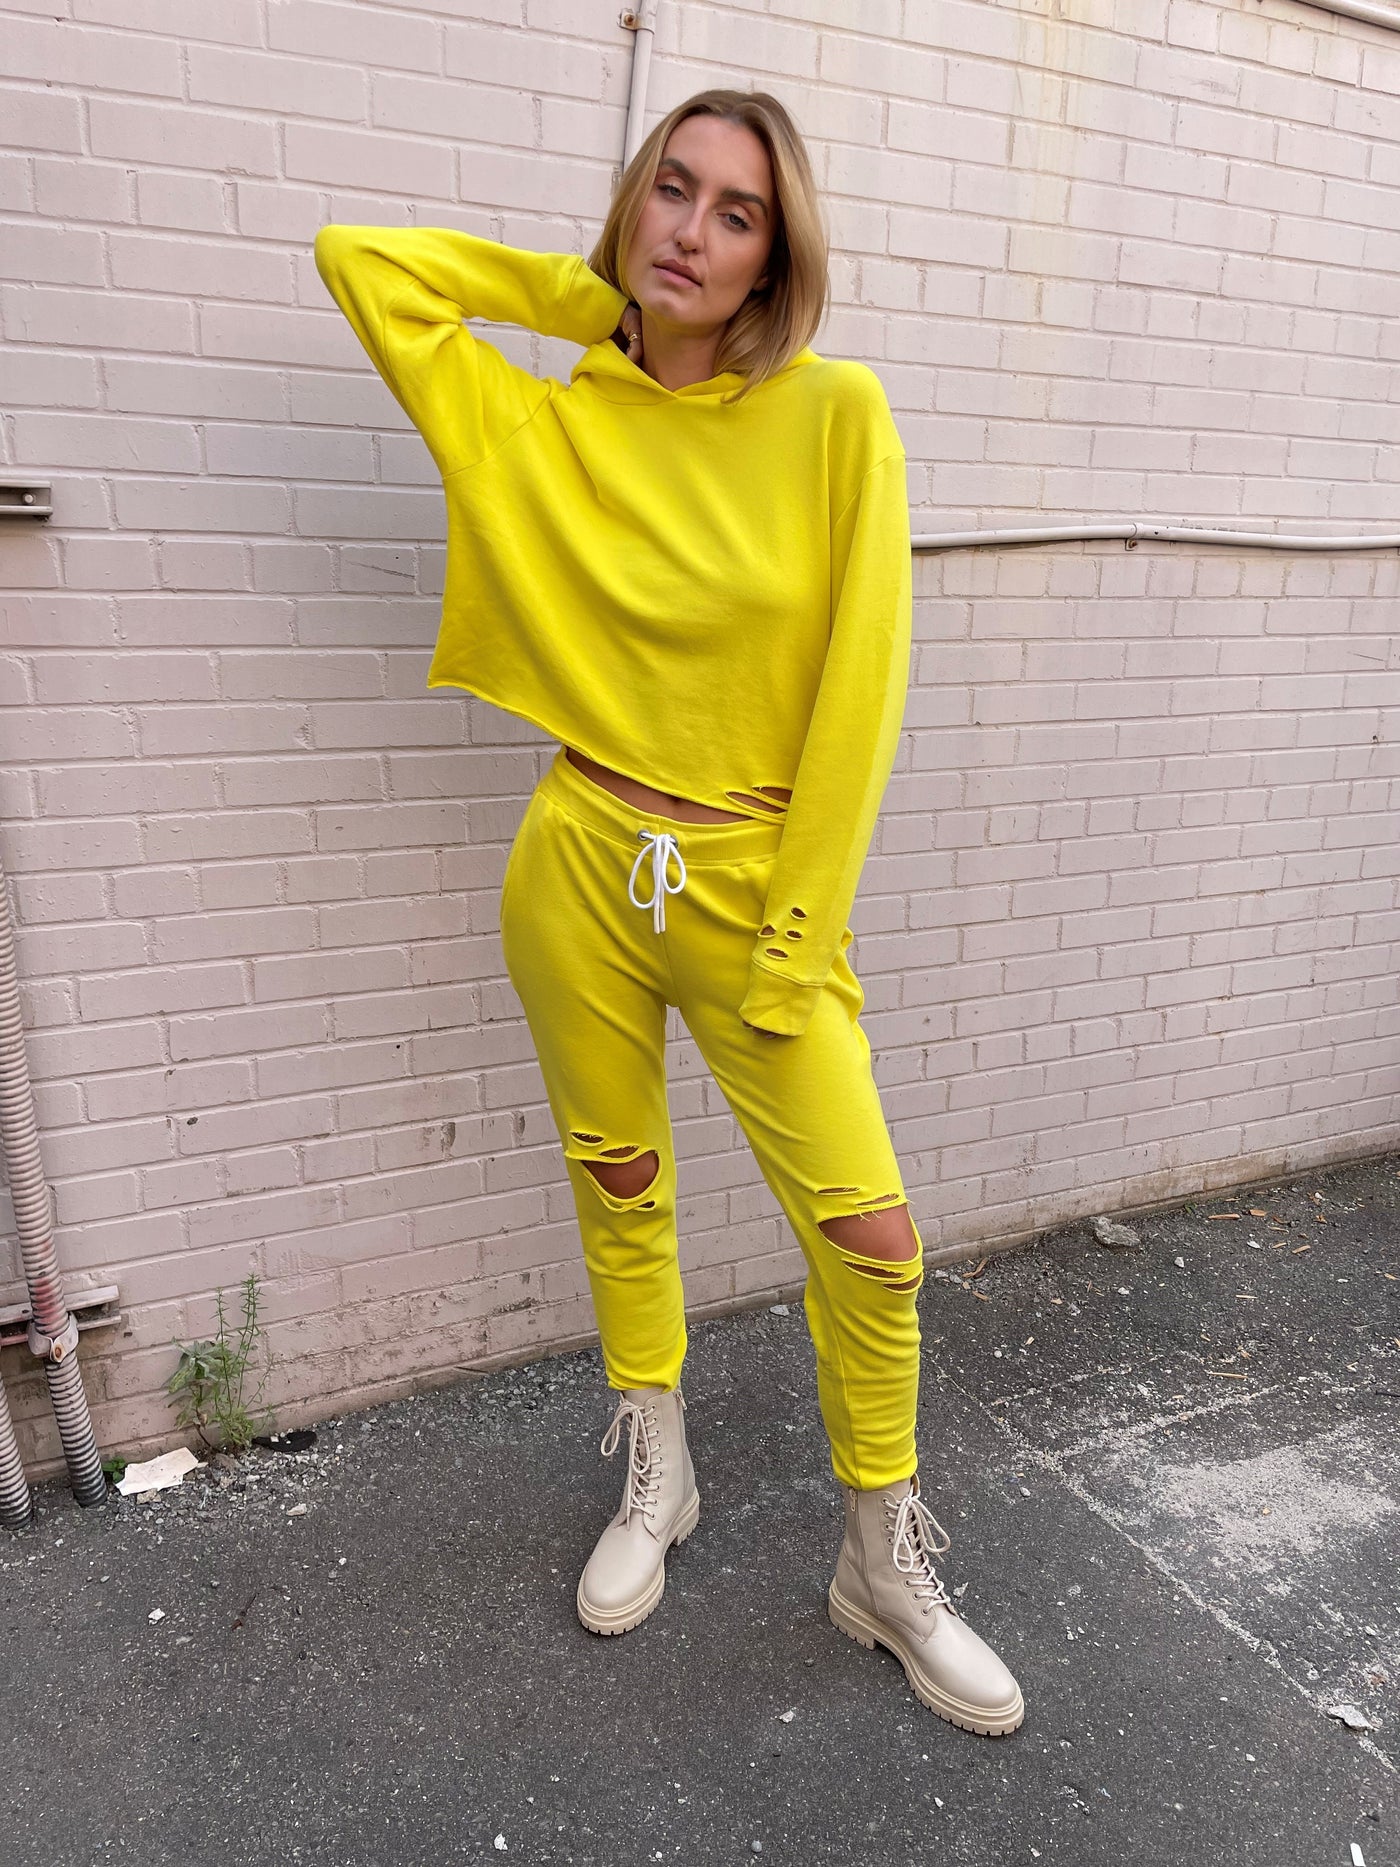 CHRLDR Tasha Bright Yellow Shredded Sweatpants